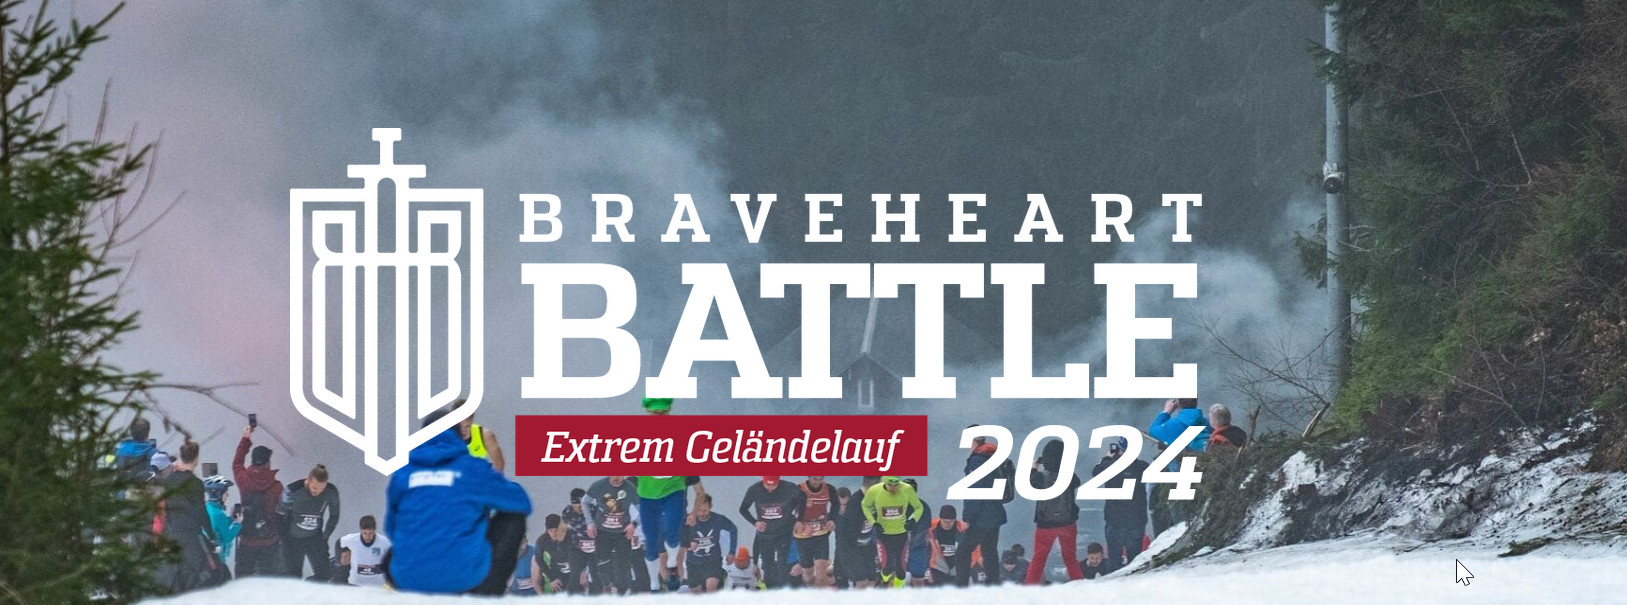 Event banner of Braveheart Battle 2024